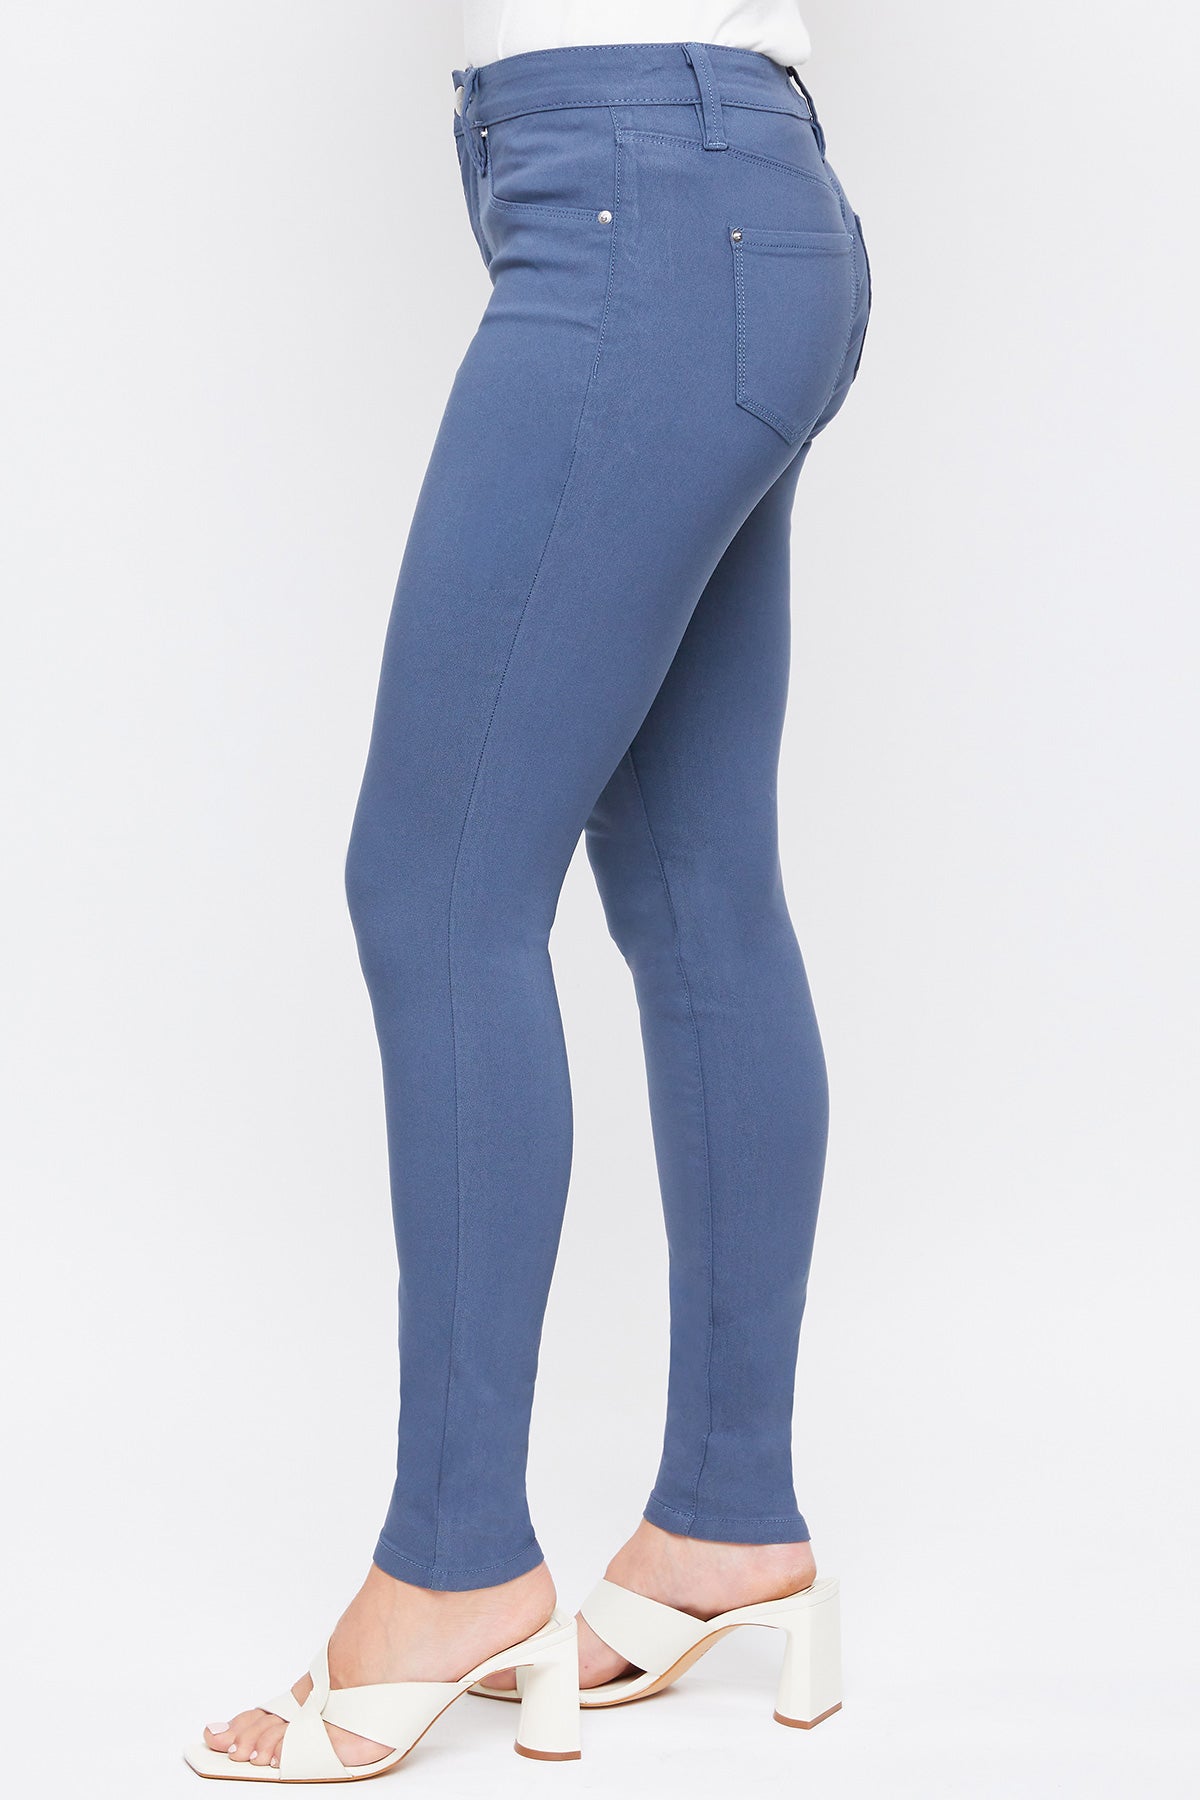 Junior Gap Proof Elastic Waist Skinny Jean 6 Pack from YMI